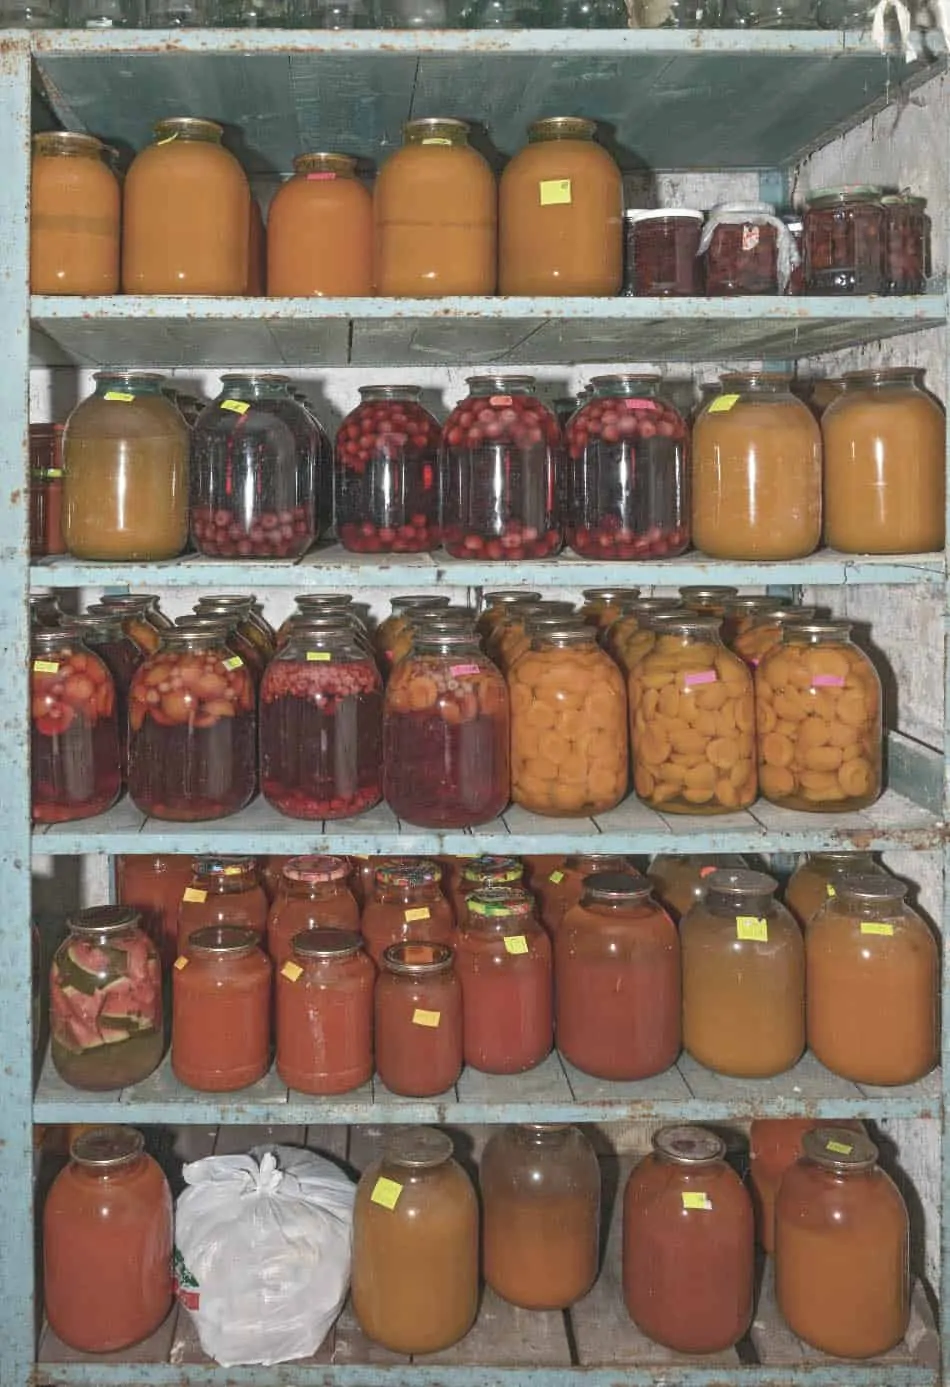 emergency food stores in mason jars on pantry shelving